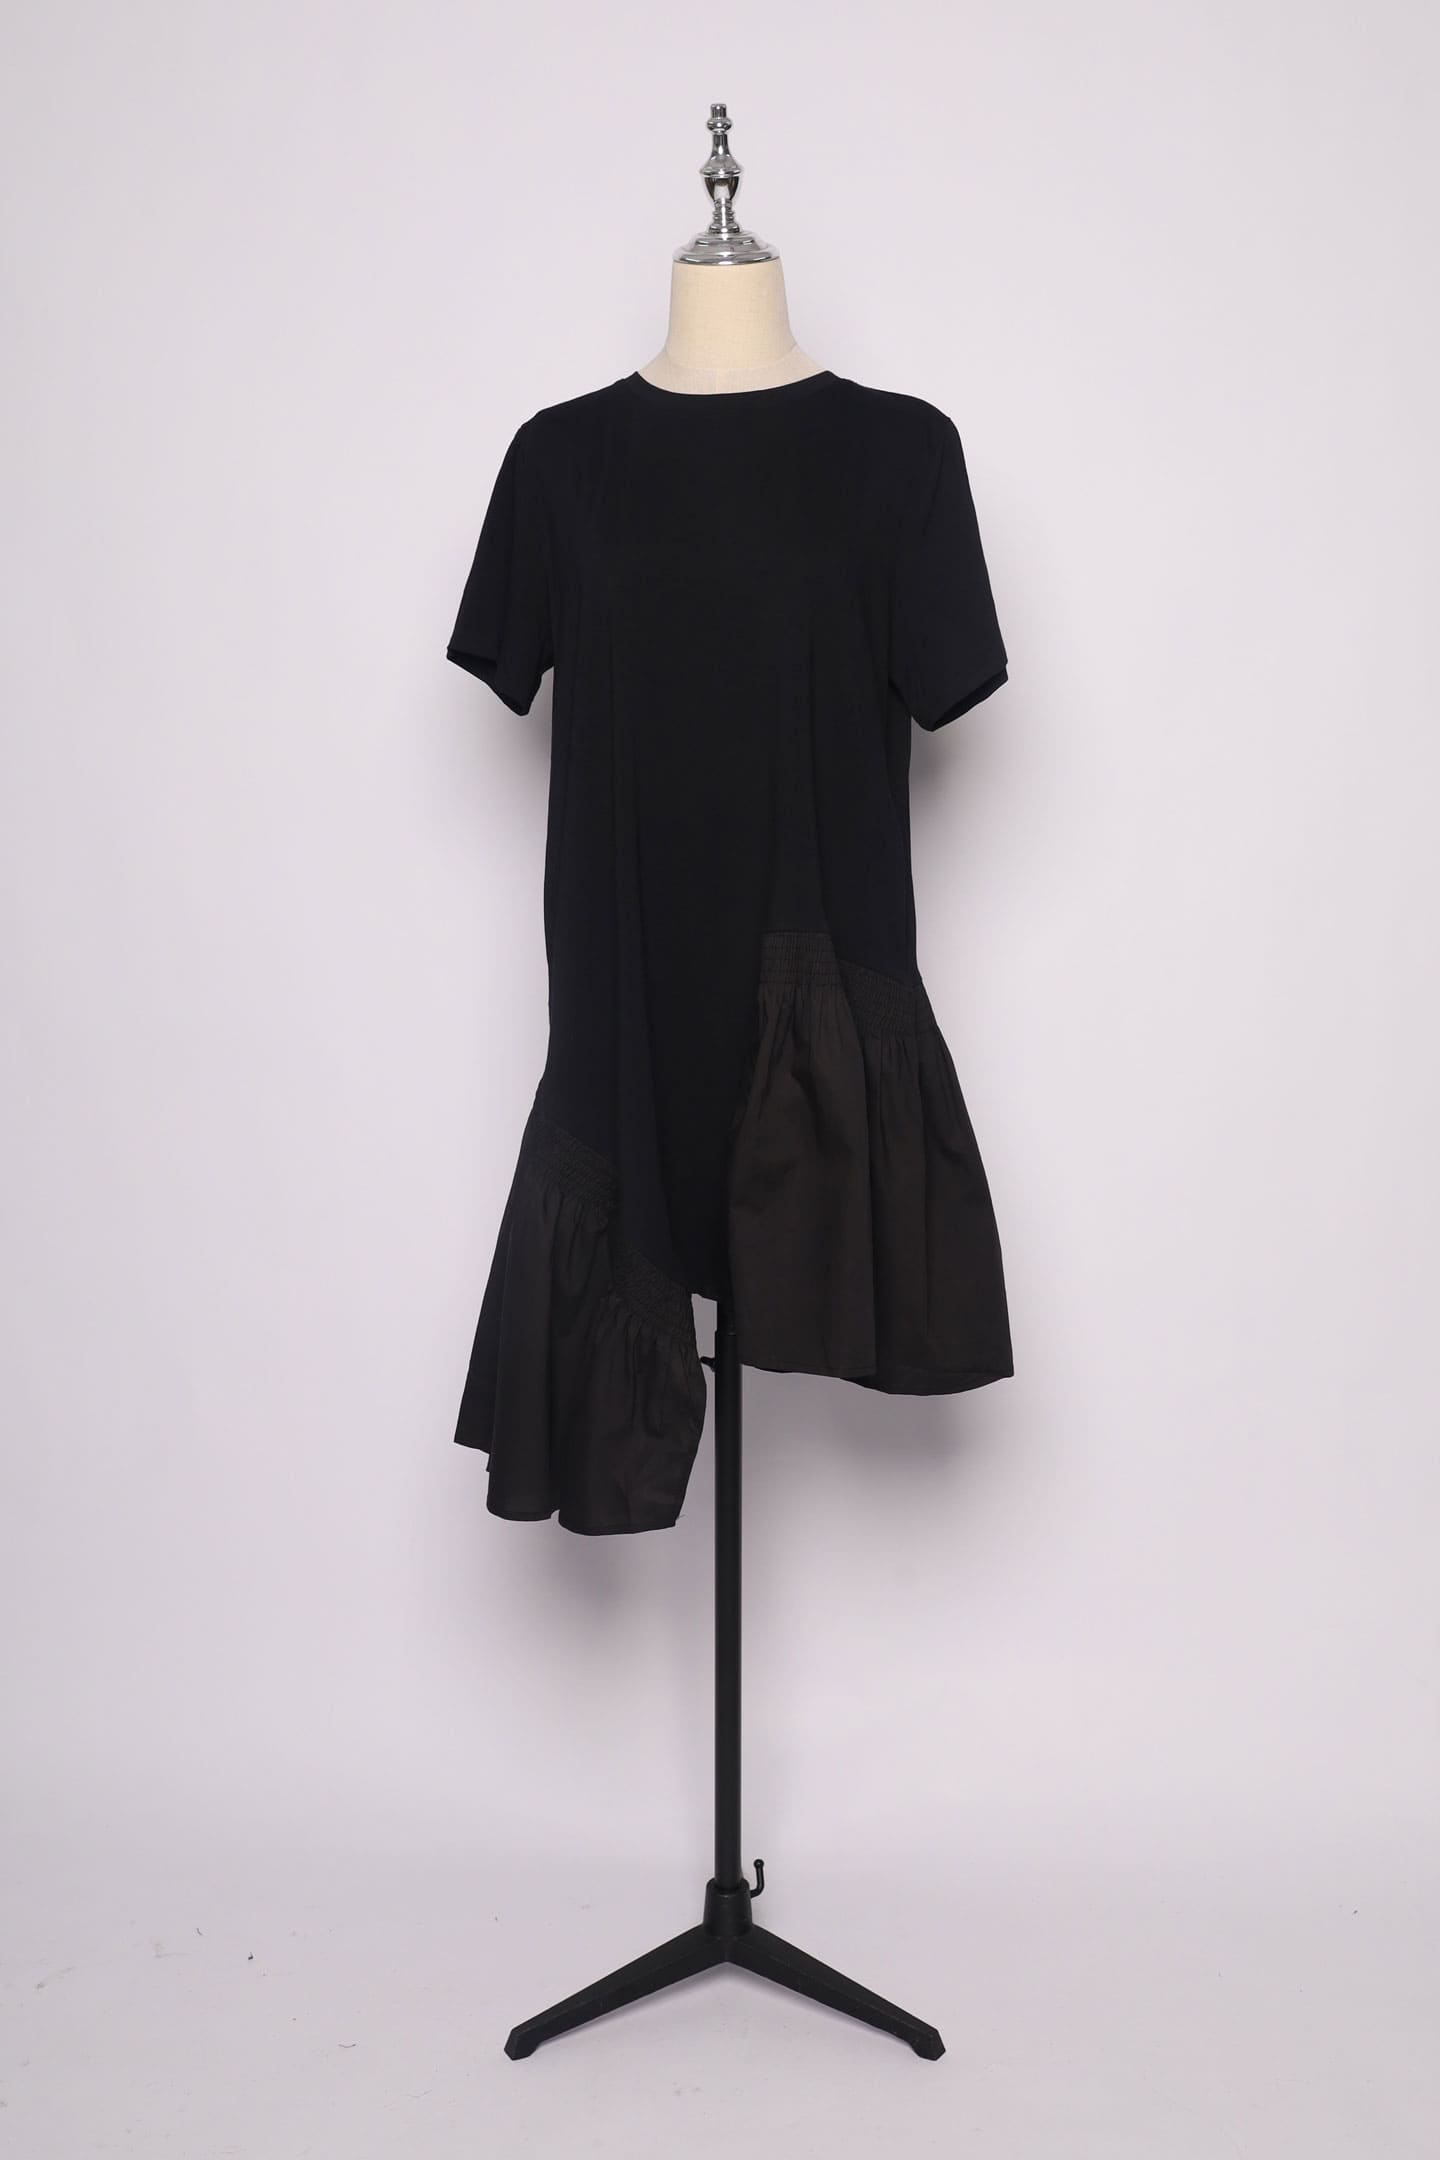 PO - Ryder Dress in Black